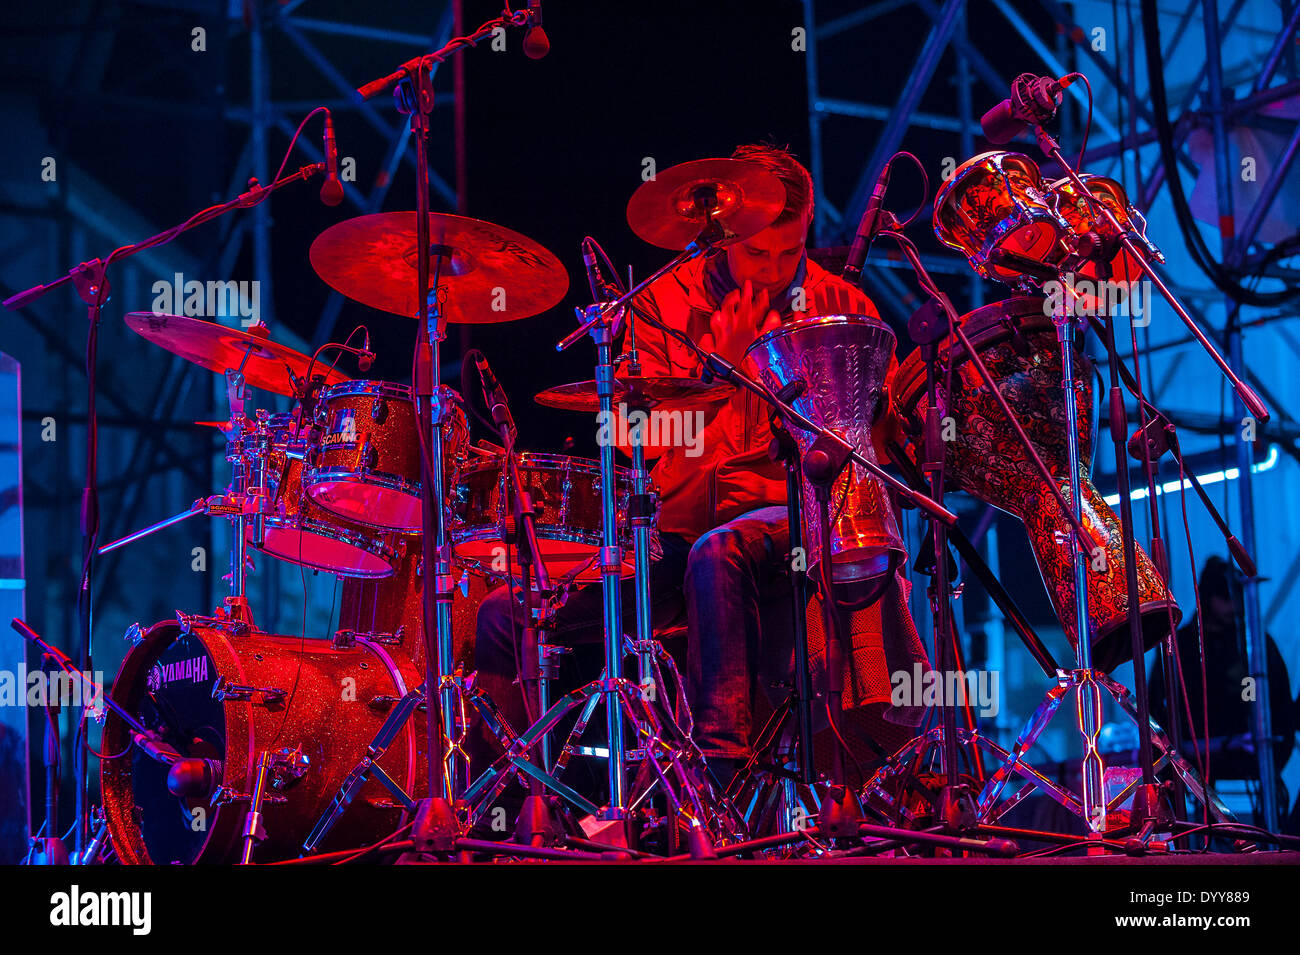 Turin, Italie. Apr 27, 2014. Torino Jazz Festival 27 avril 2014 - Al Di Meola Playng Beatles et plus - Peter Kaszas Crédit : Batteur Realy Easy Star/Alamy Live News Banque D'Images